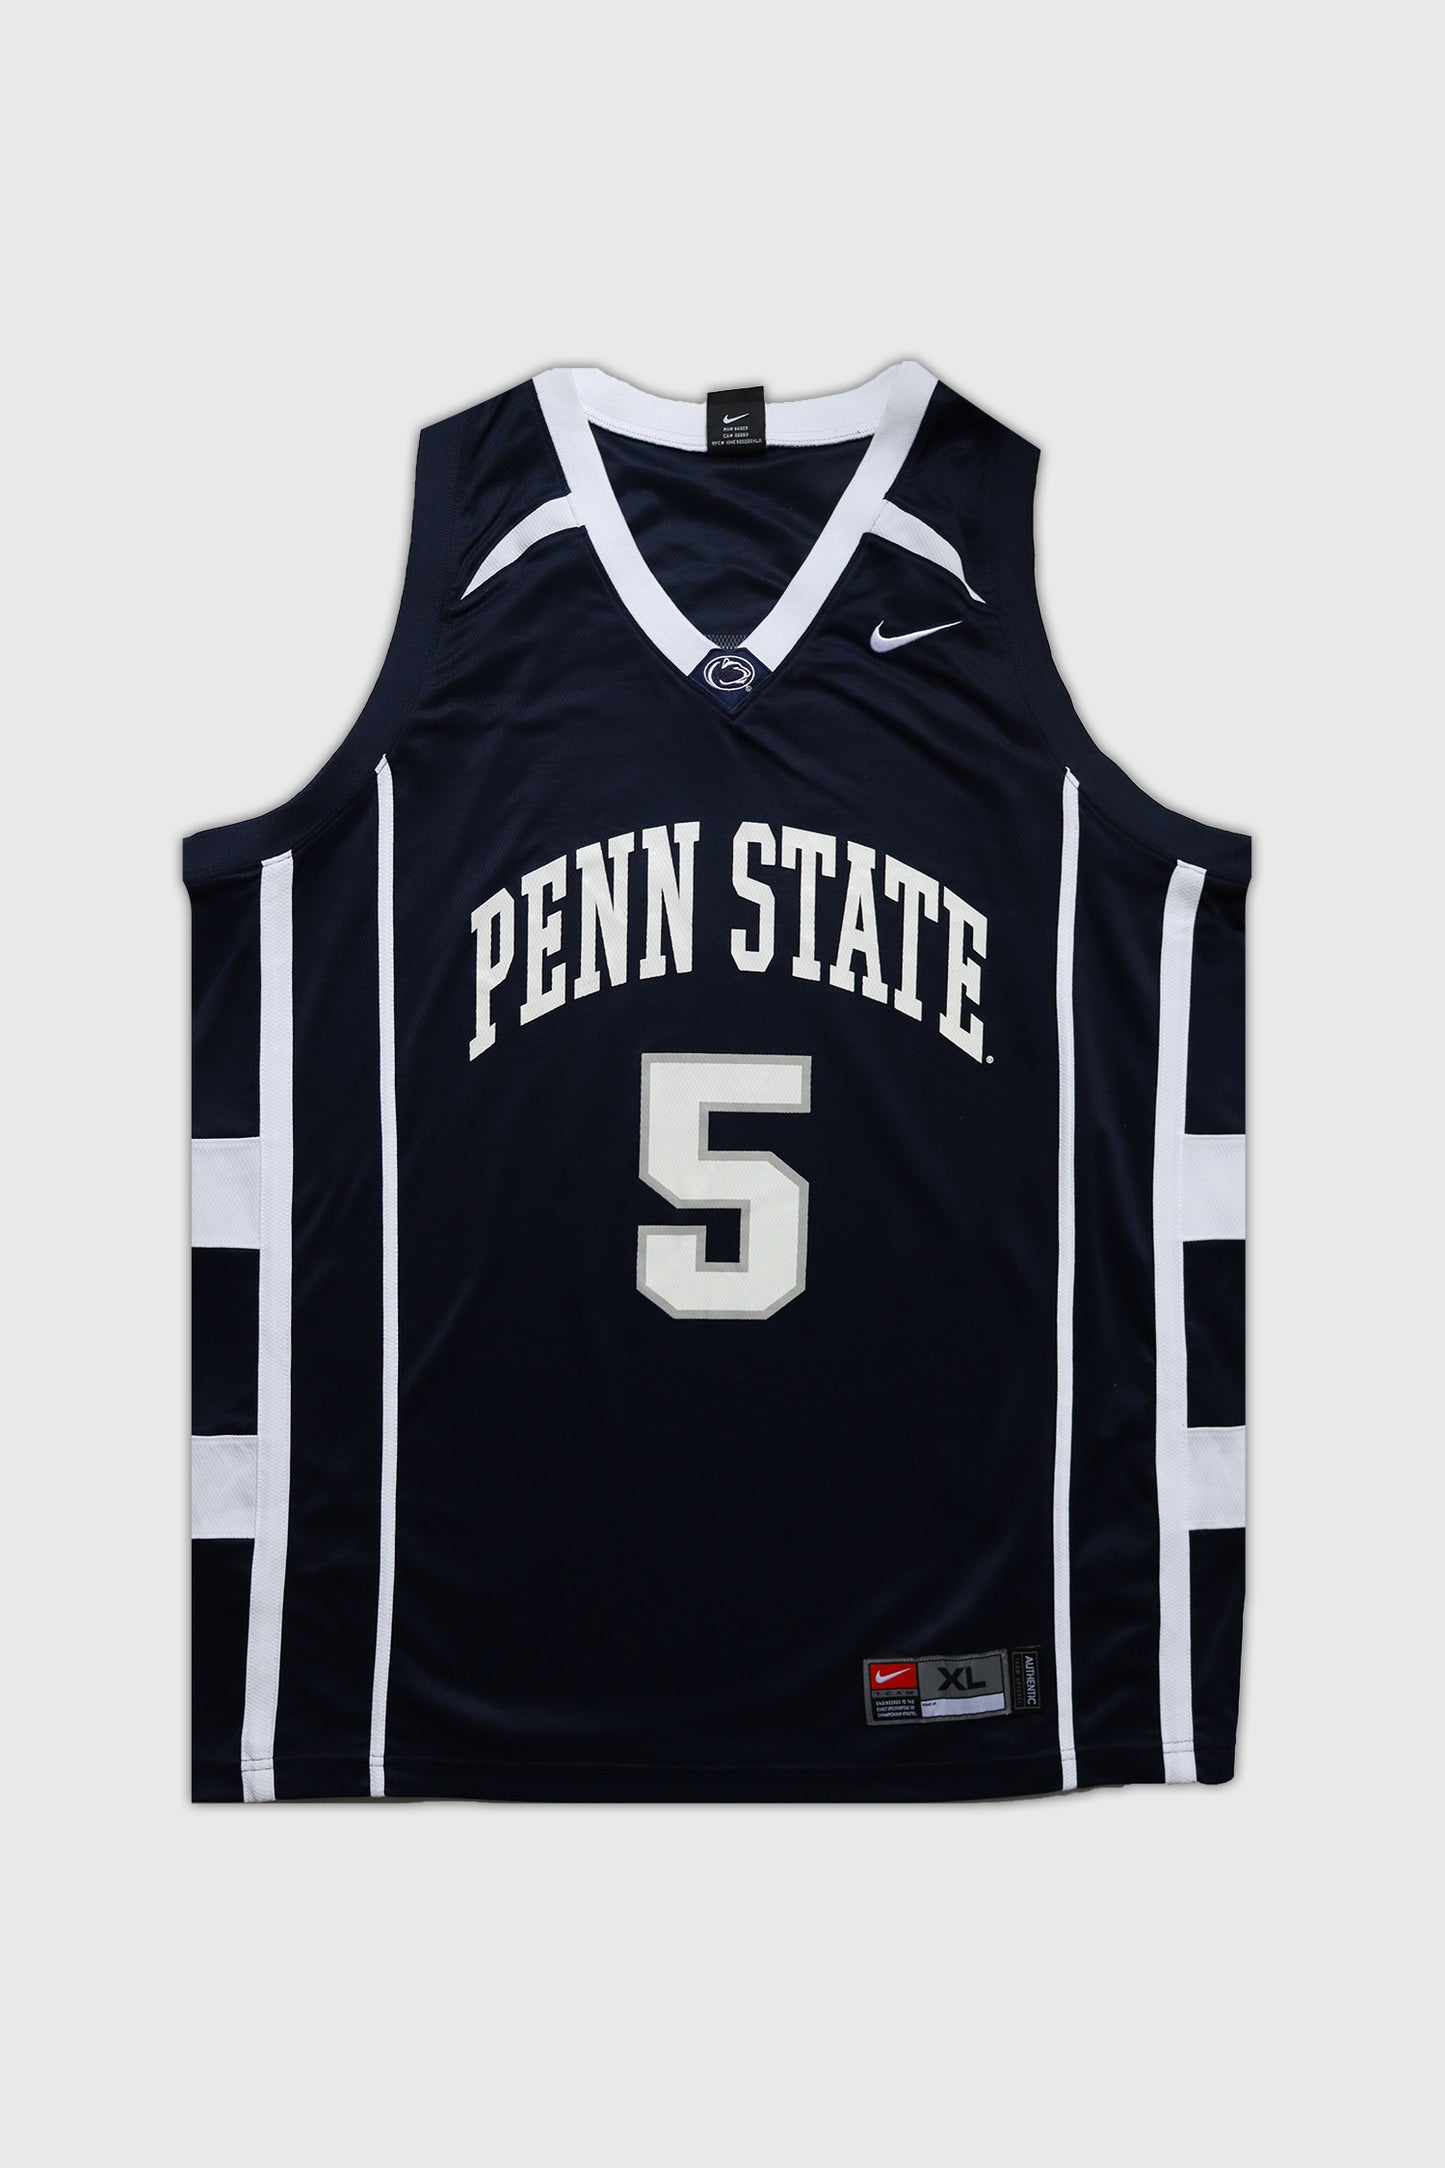 Maillot Nike Penn State University